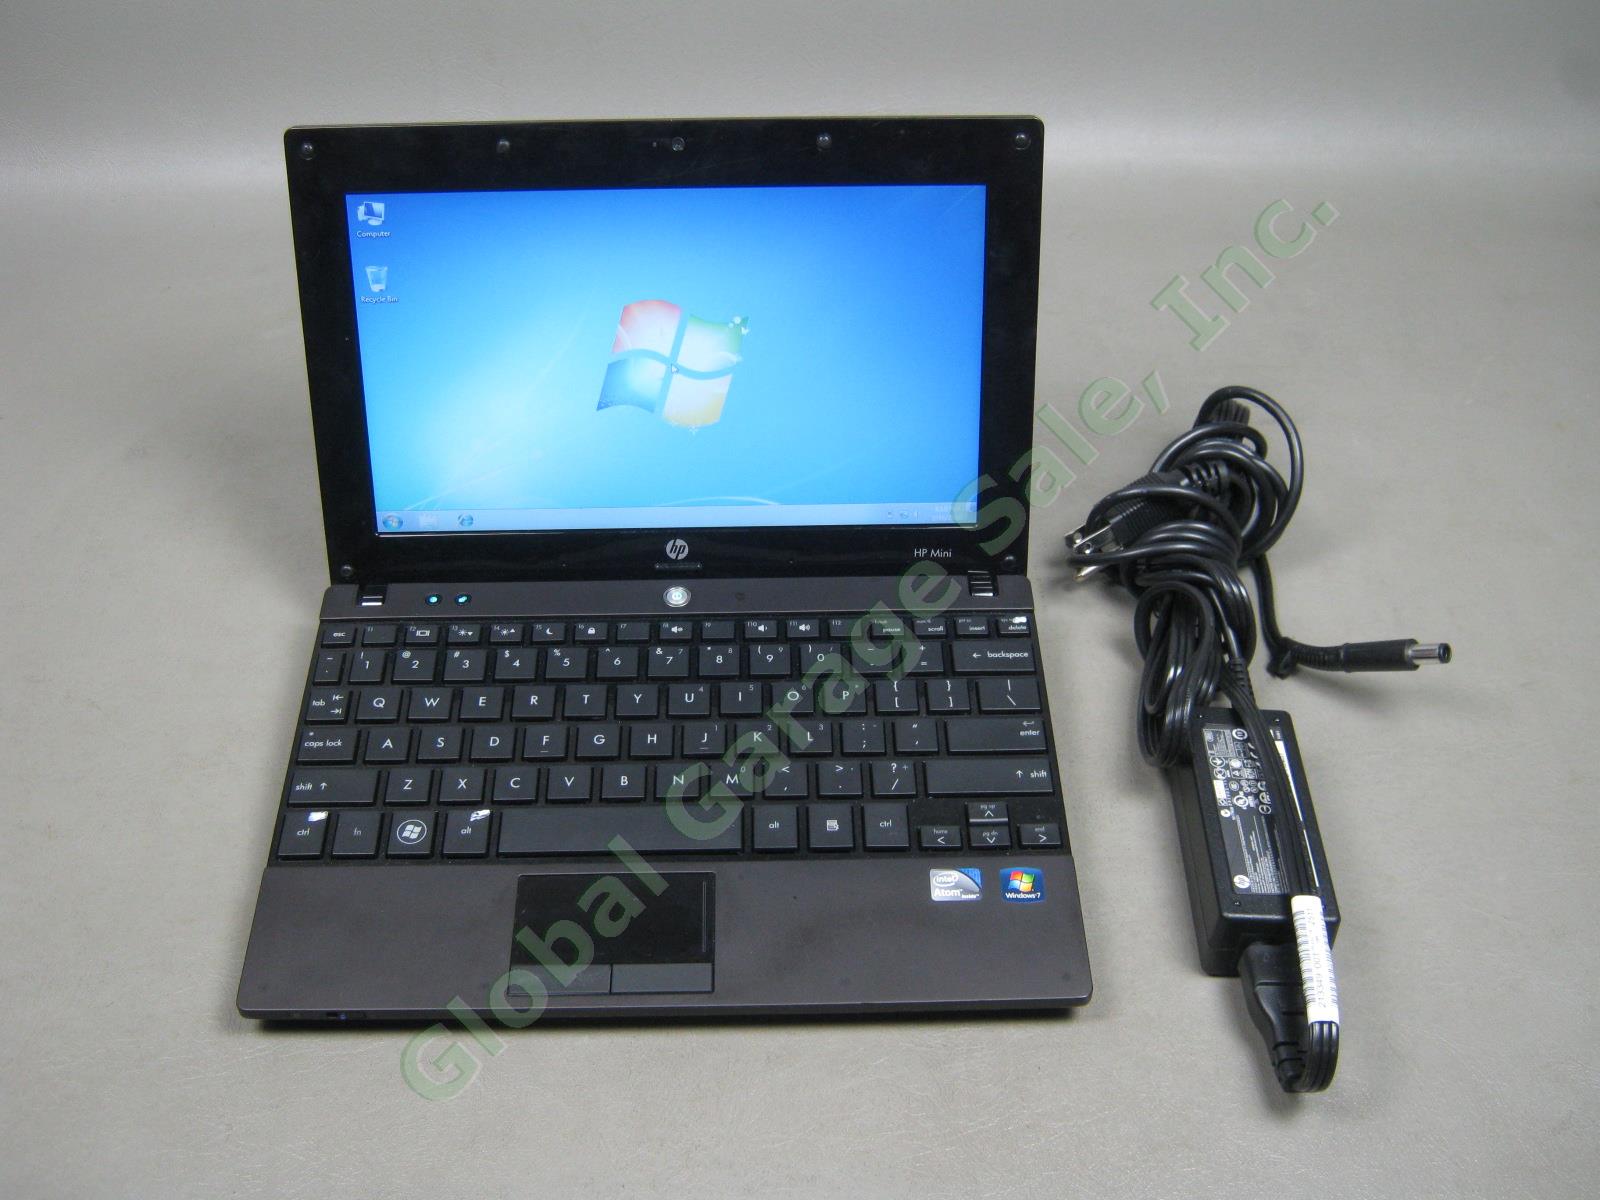 HP Mini 5103 10.1" Netbook Laptop Intel Atom 1.83GHz 2GB RAM 160GB HDD Windows 7